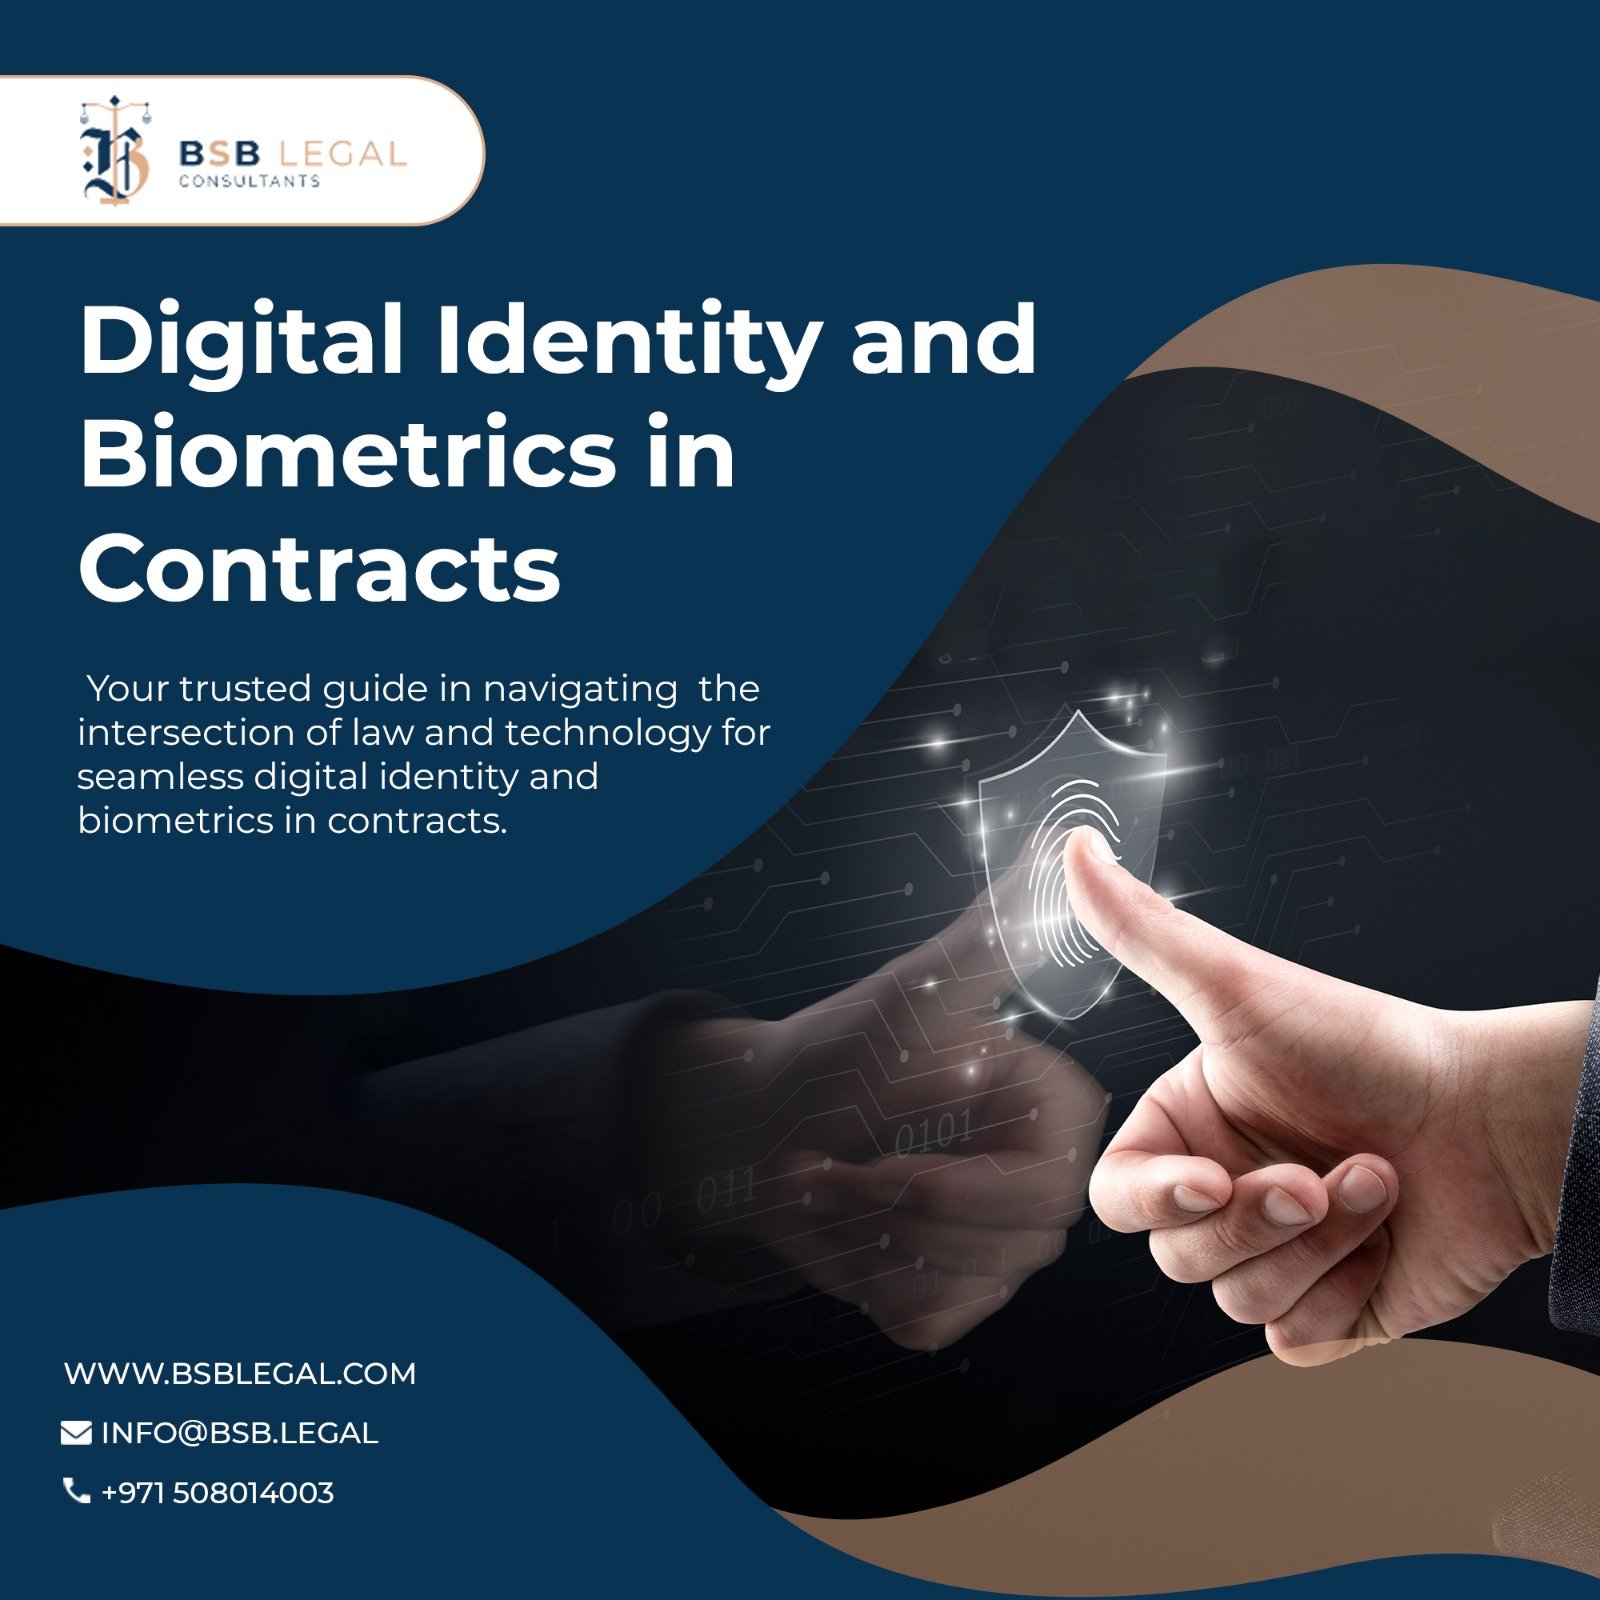 Biometrics in Contracts